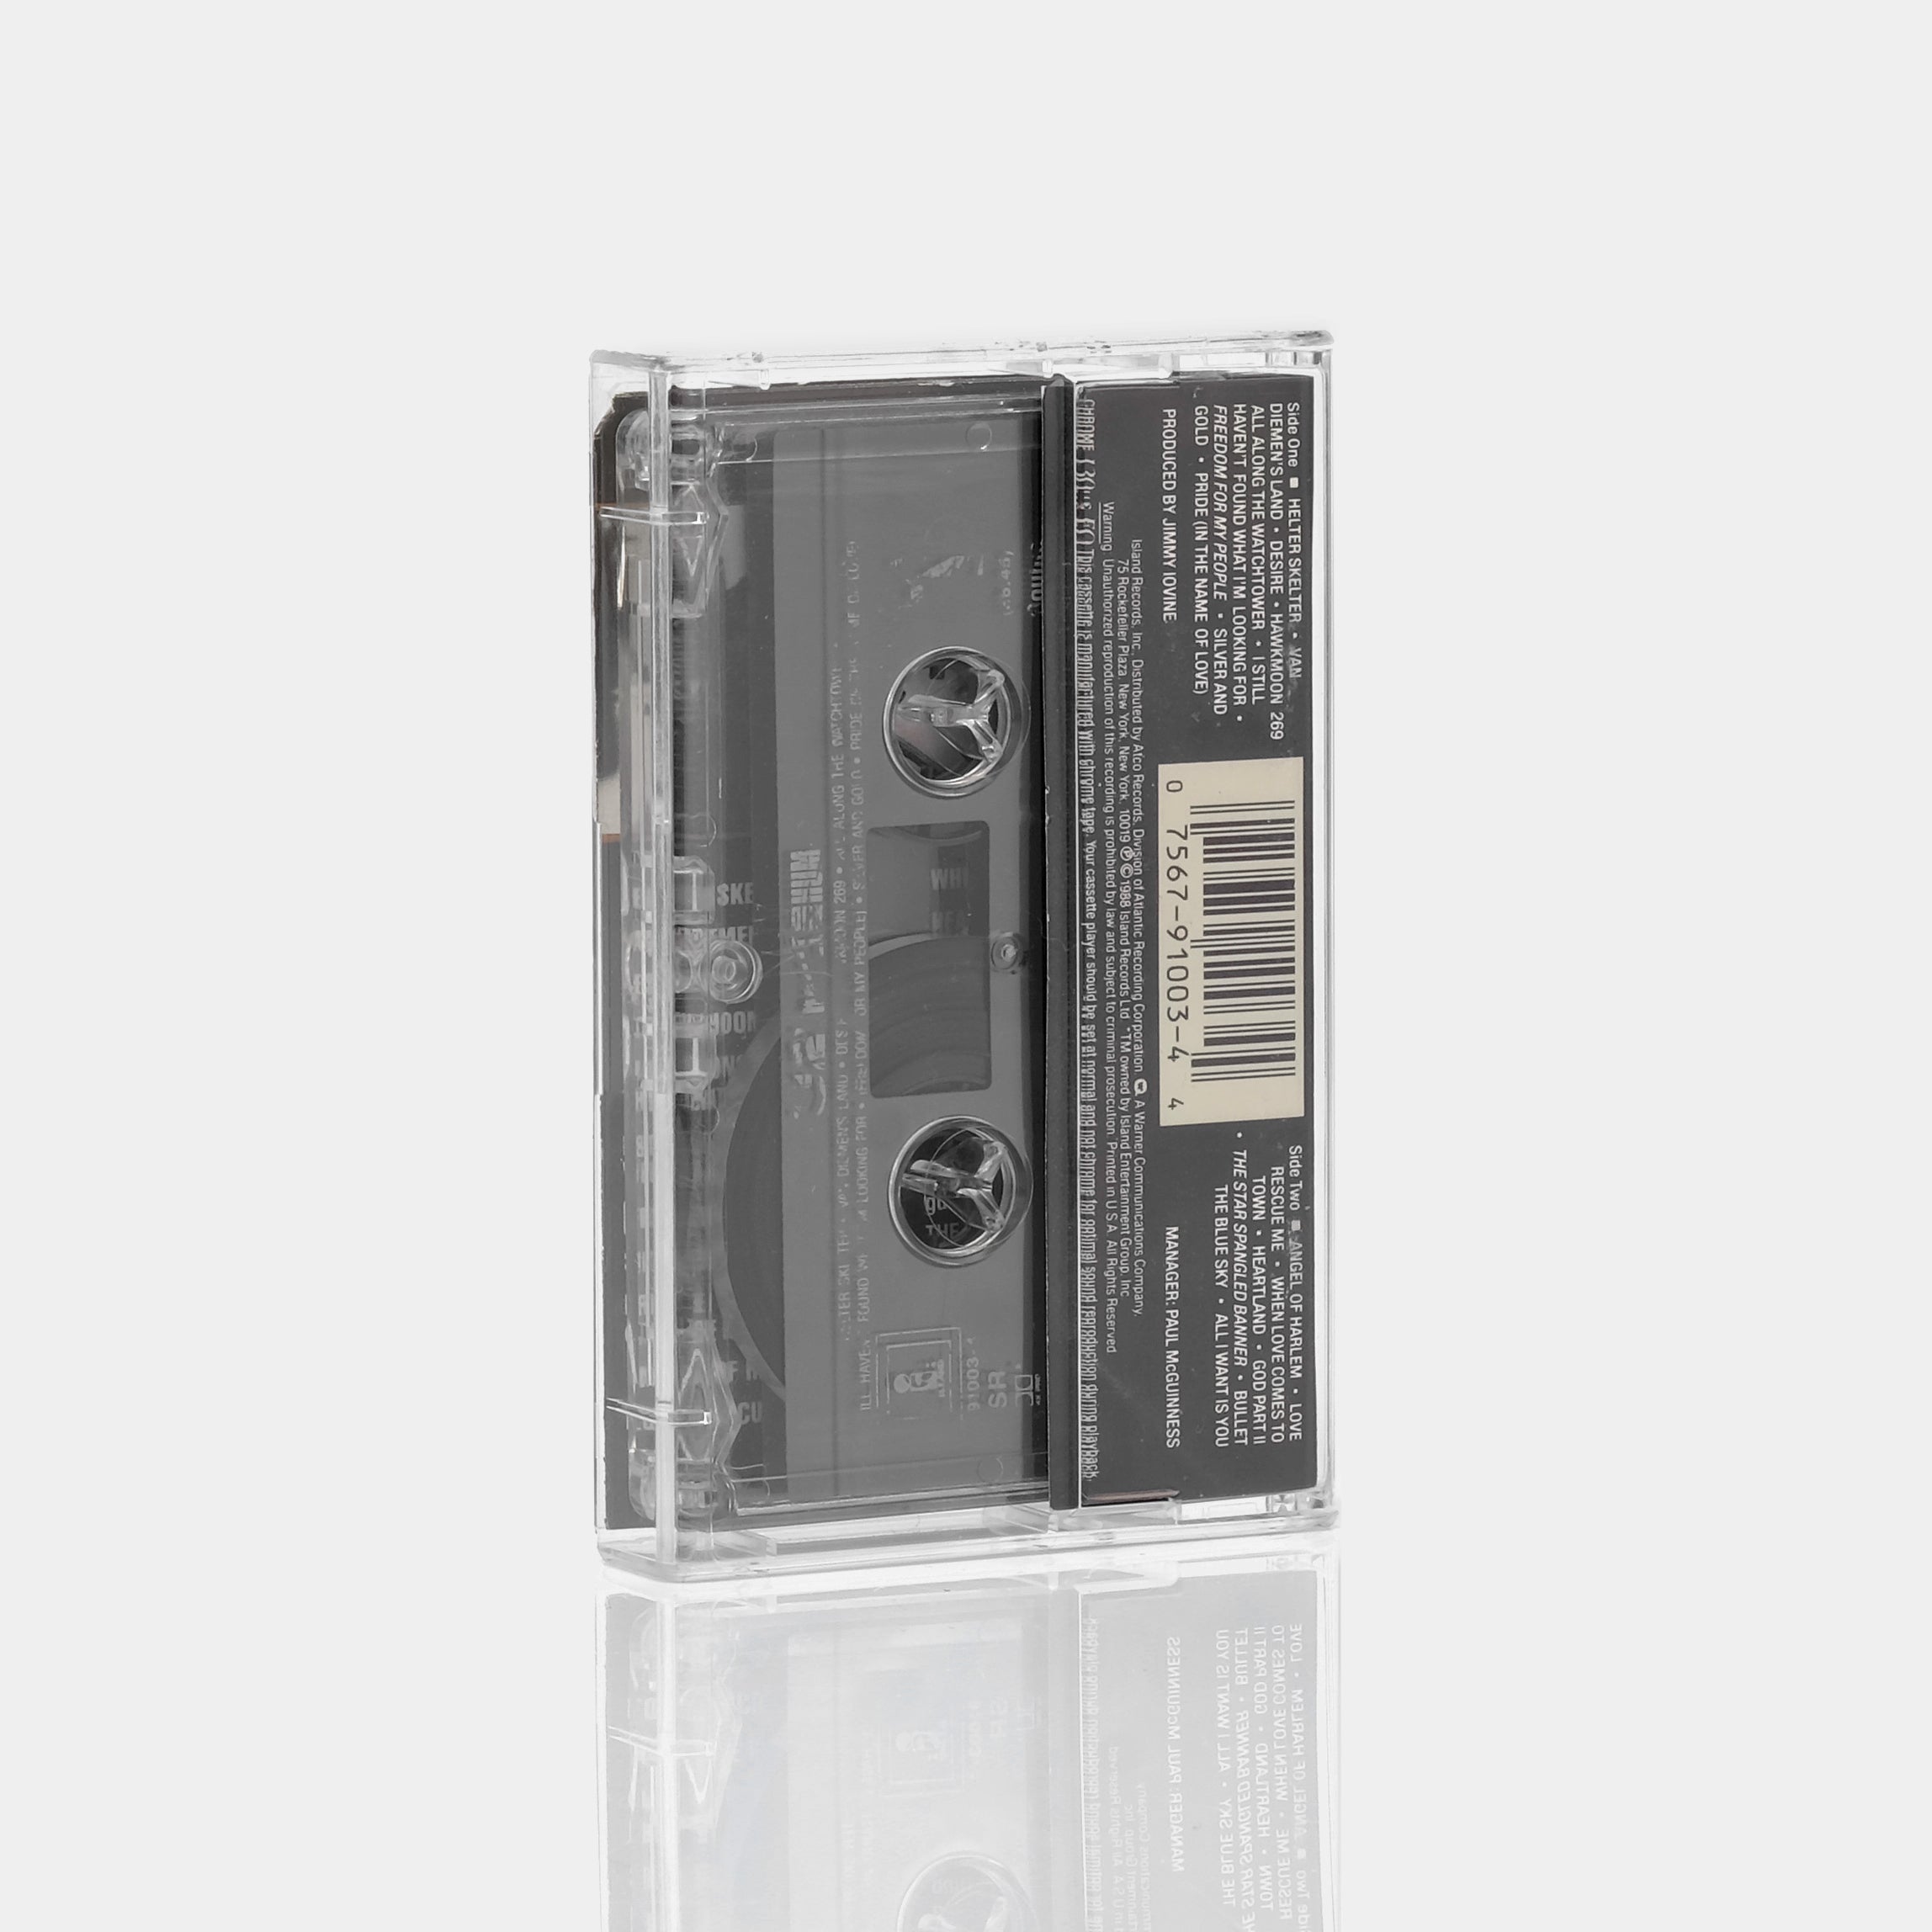 U2 - Rattle And Hum Cassette Tape